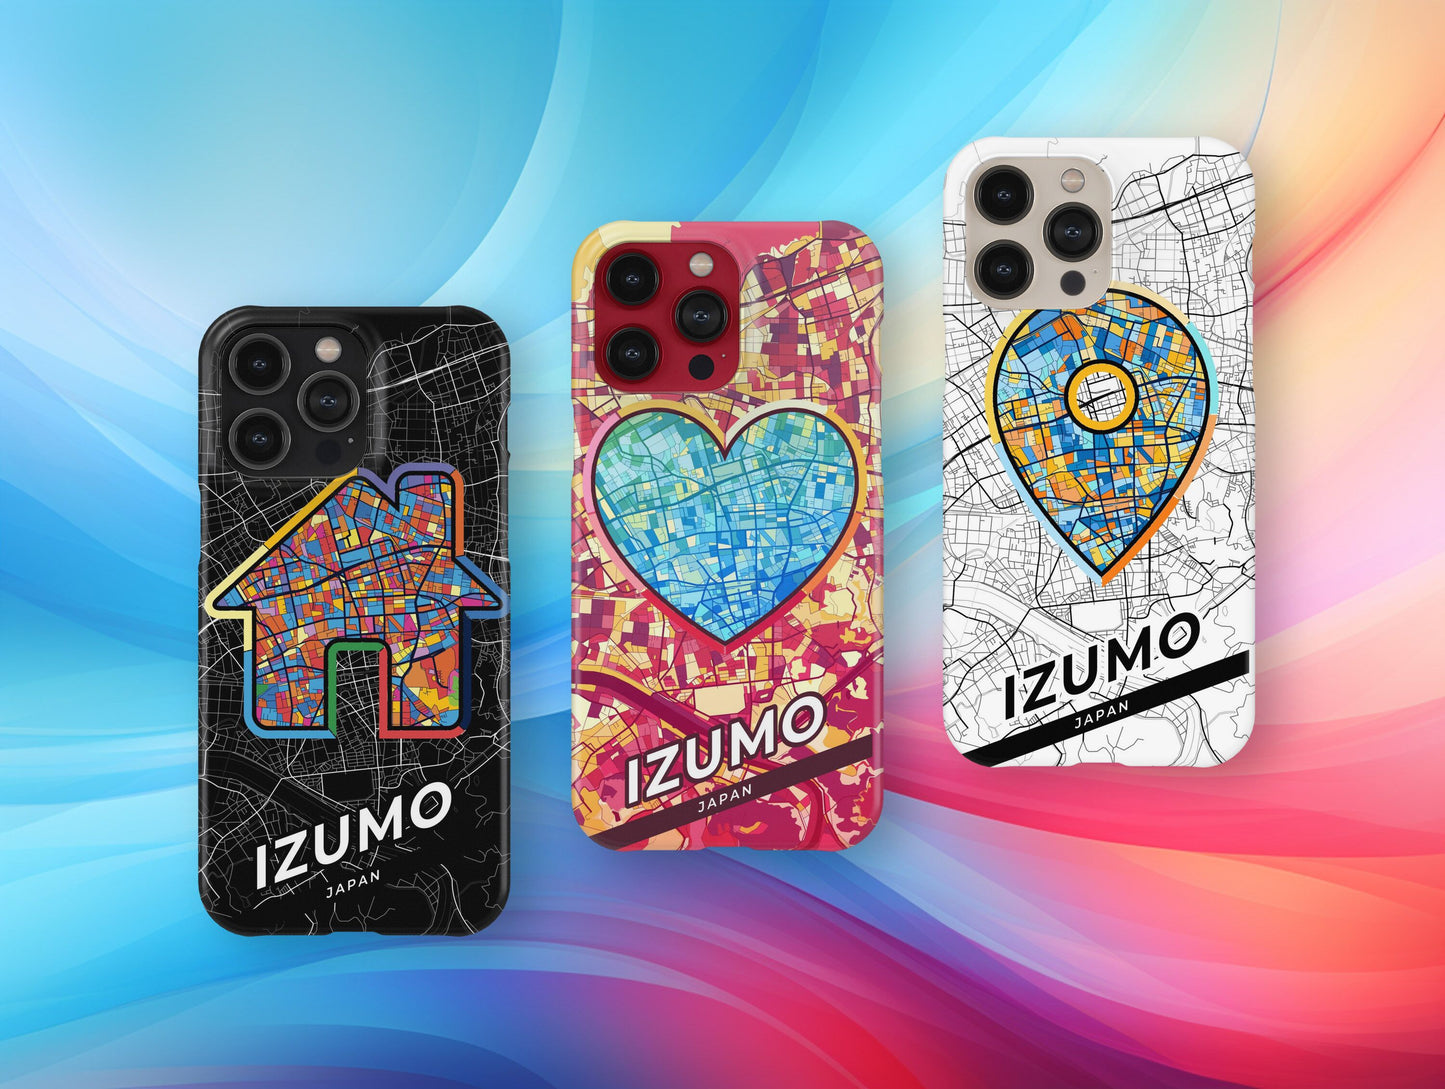 Izumo Japan slim phone case with colorful icon. Birthday, wedding or housewarming gift. Couple match cases.